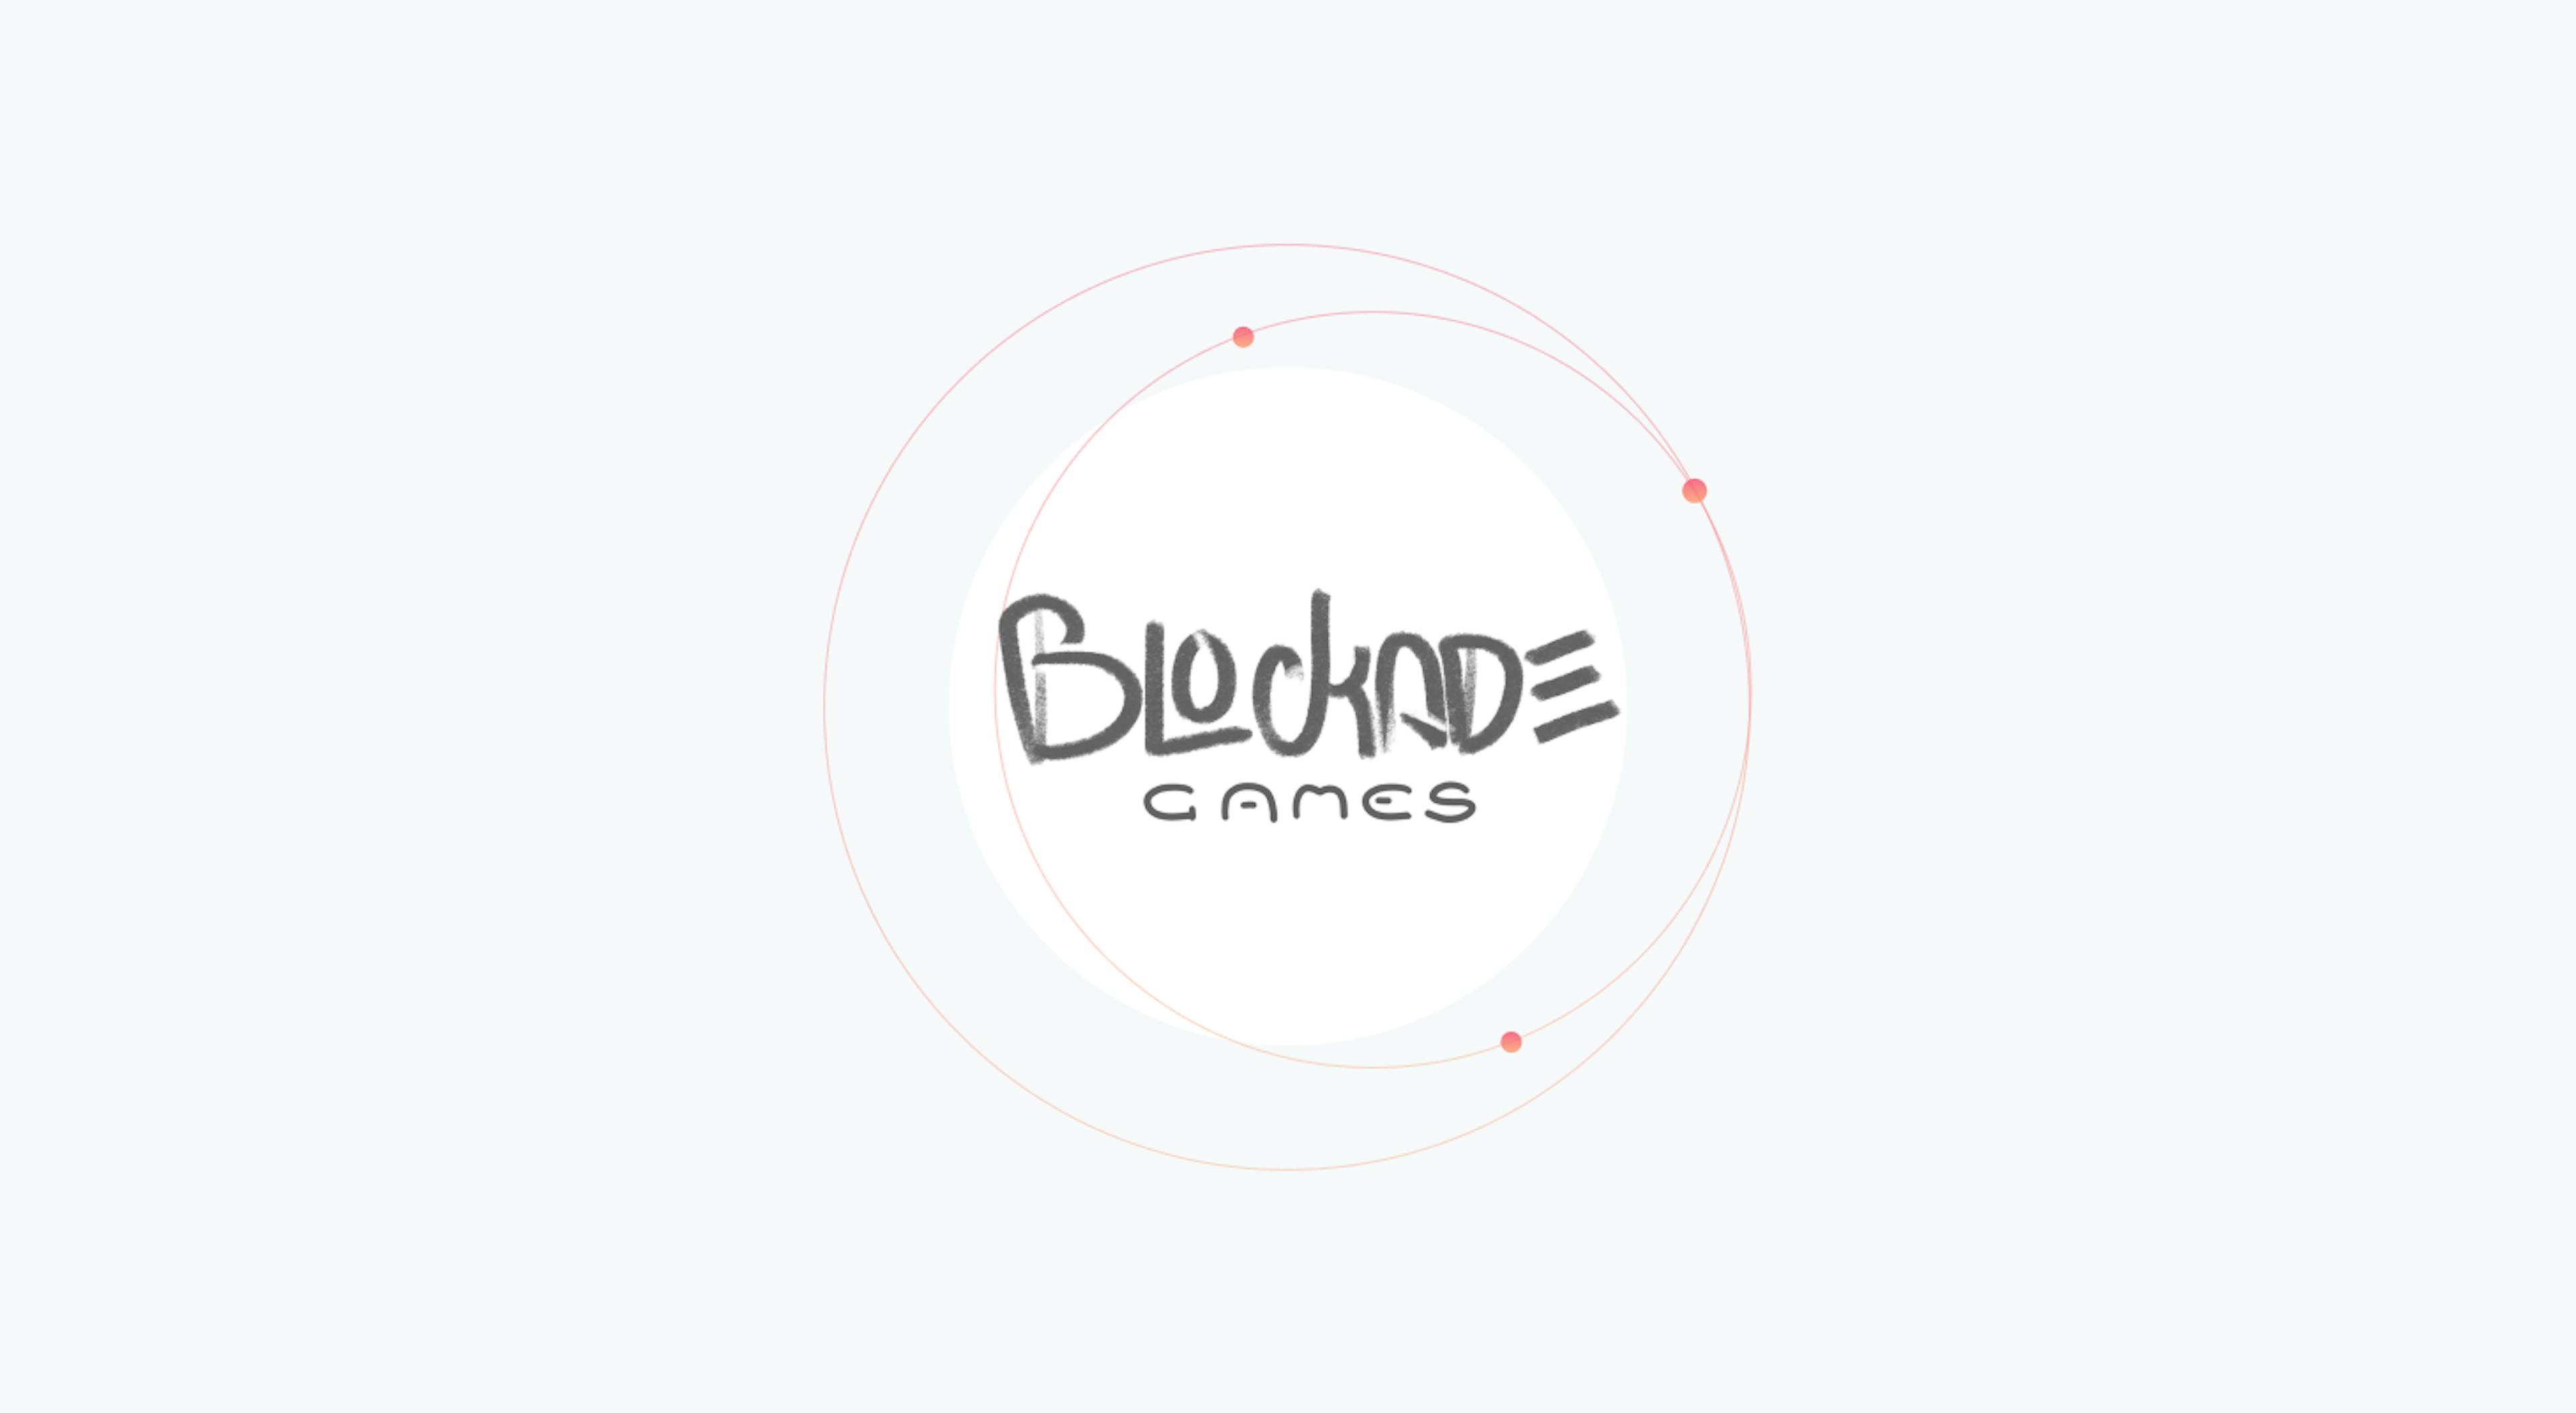 Blockade Games 